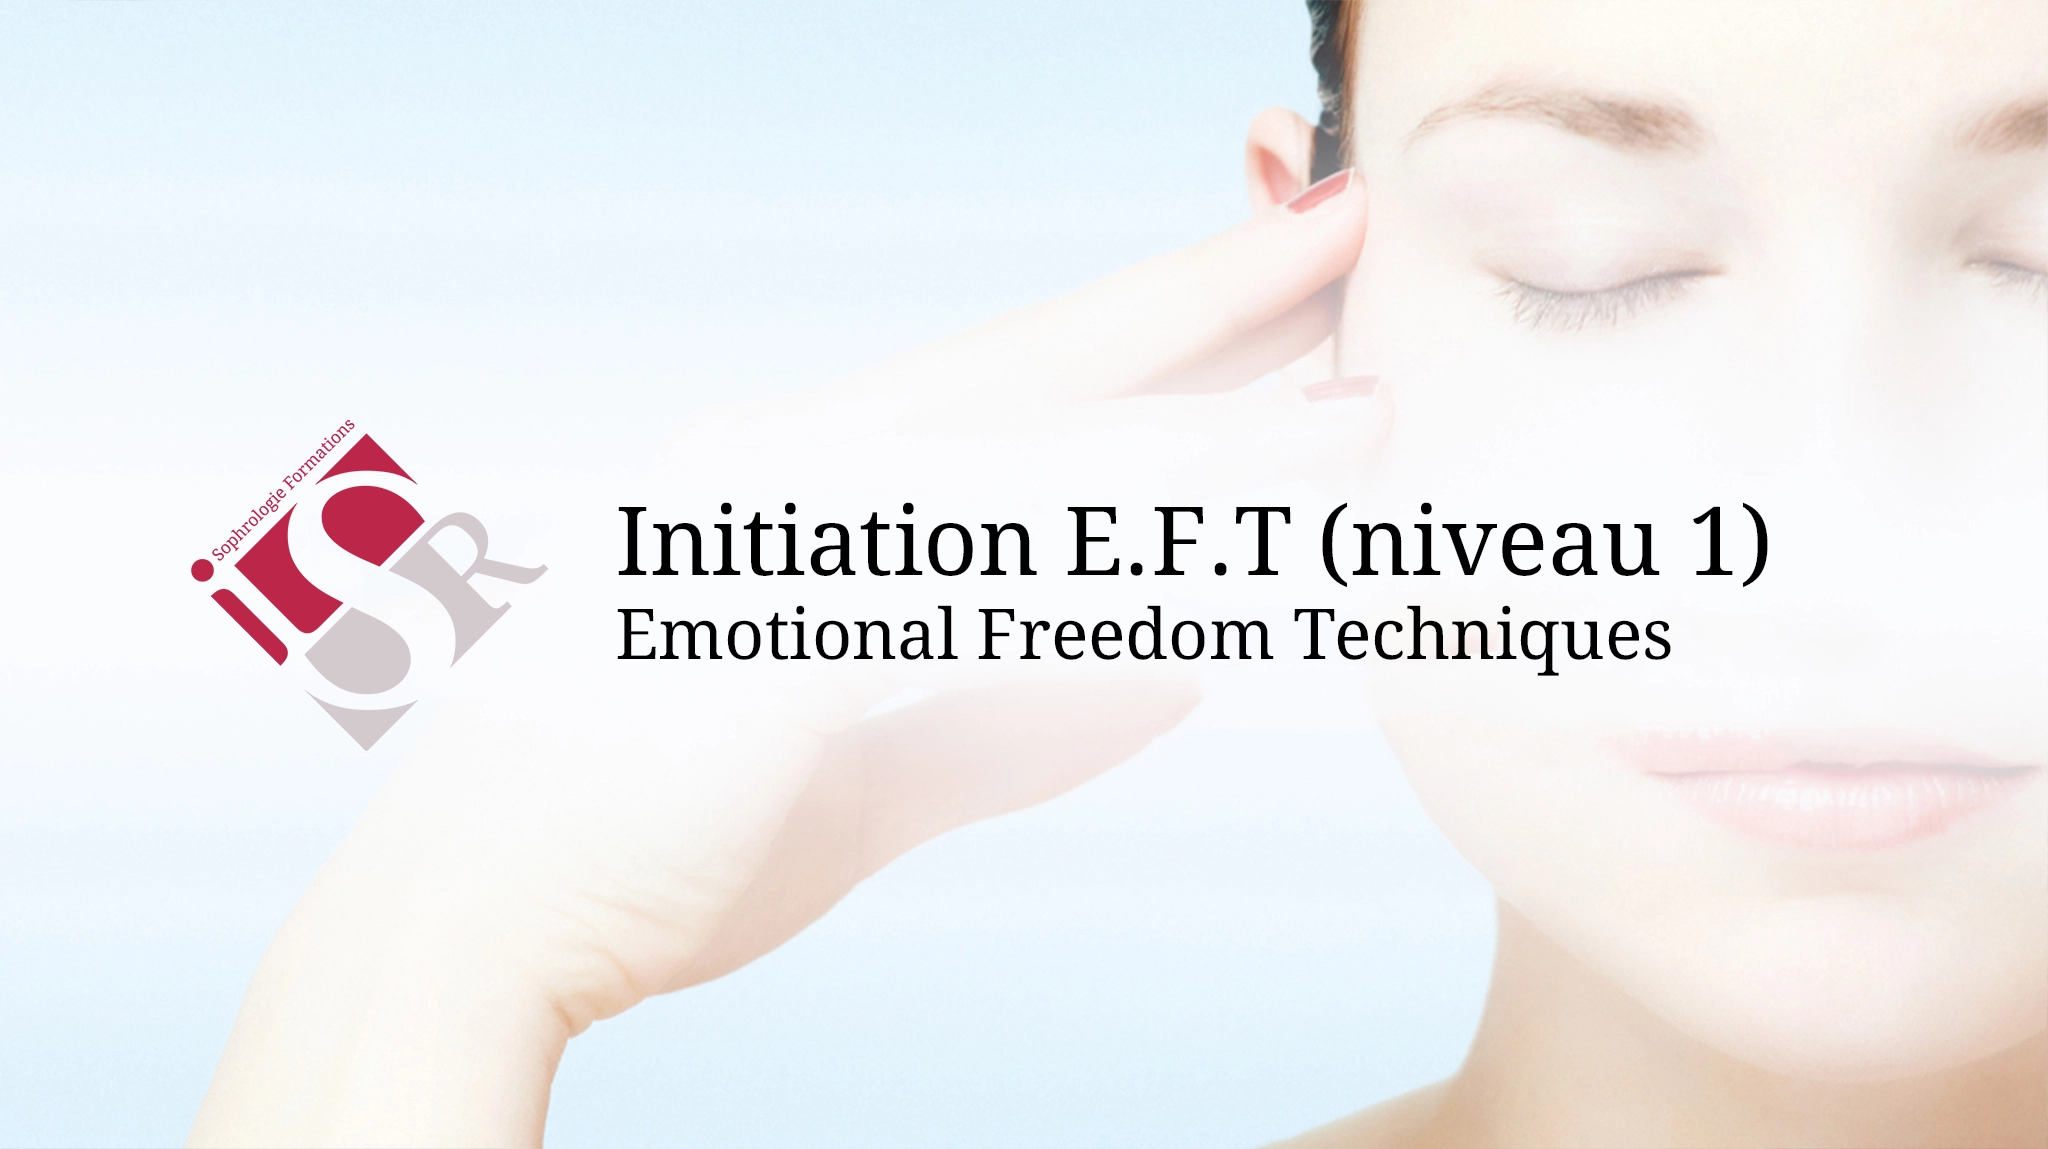 initiation EFT emotional freedom techniques